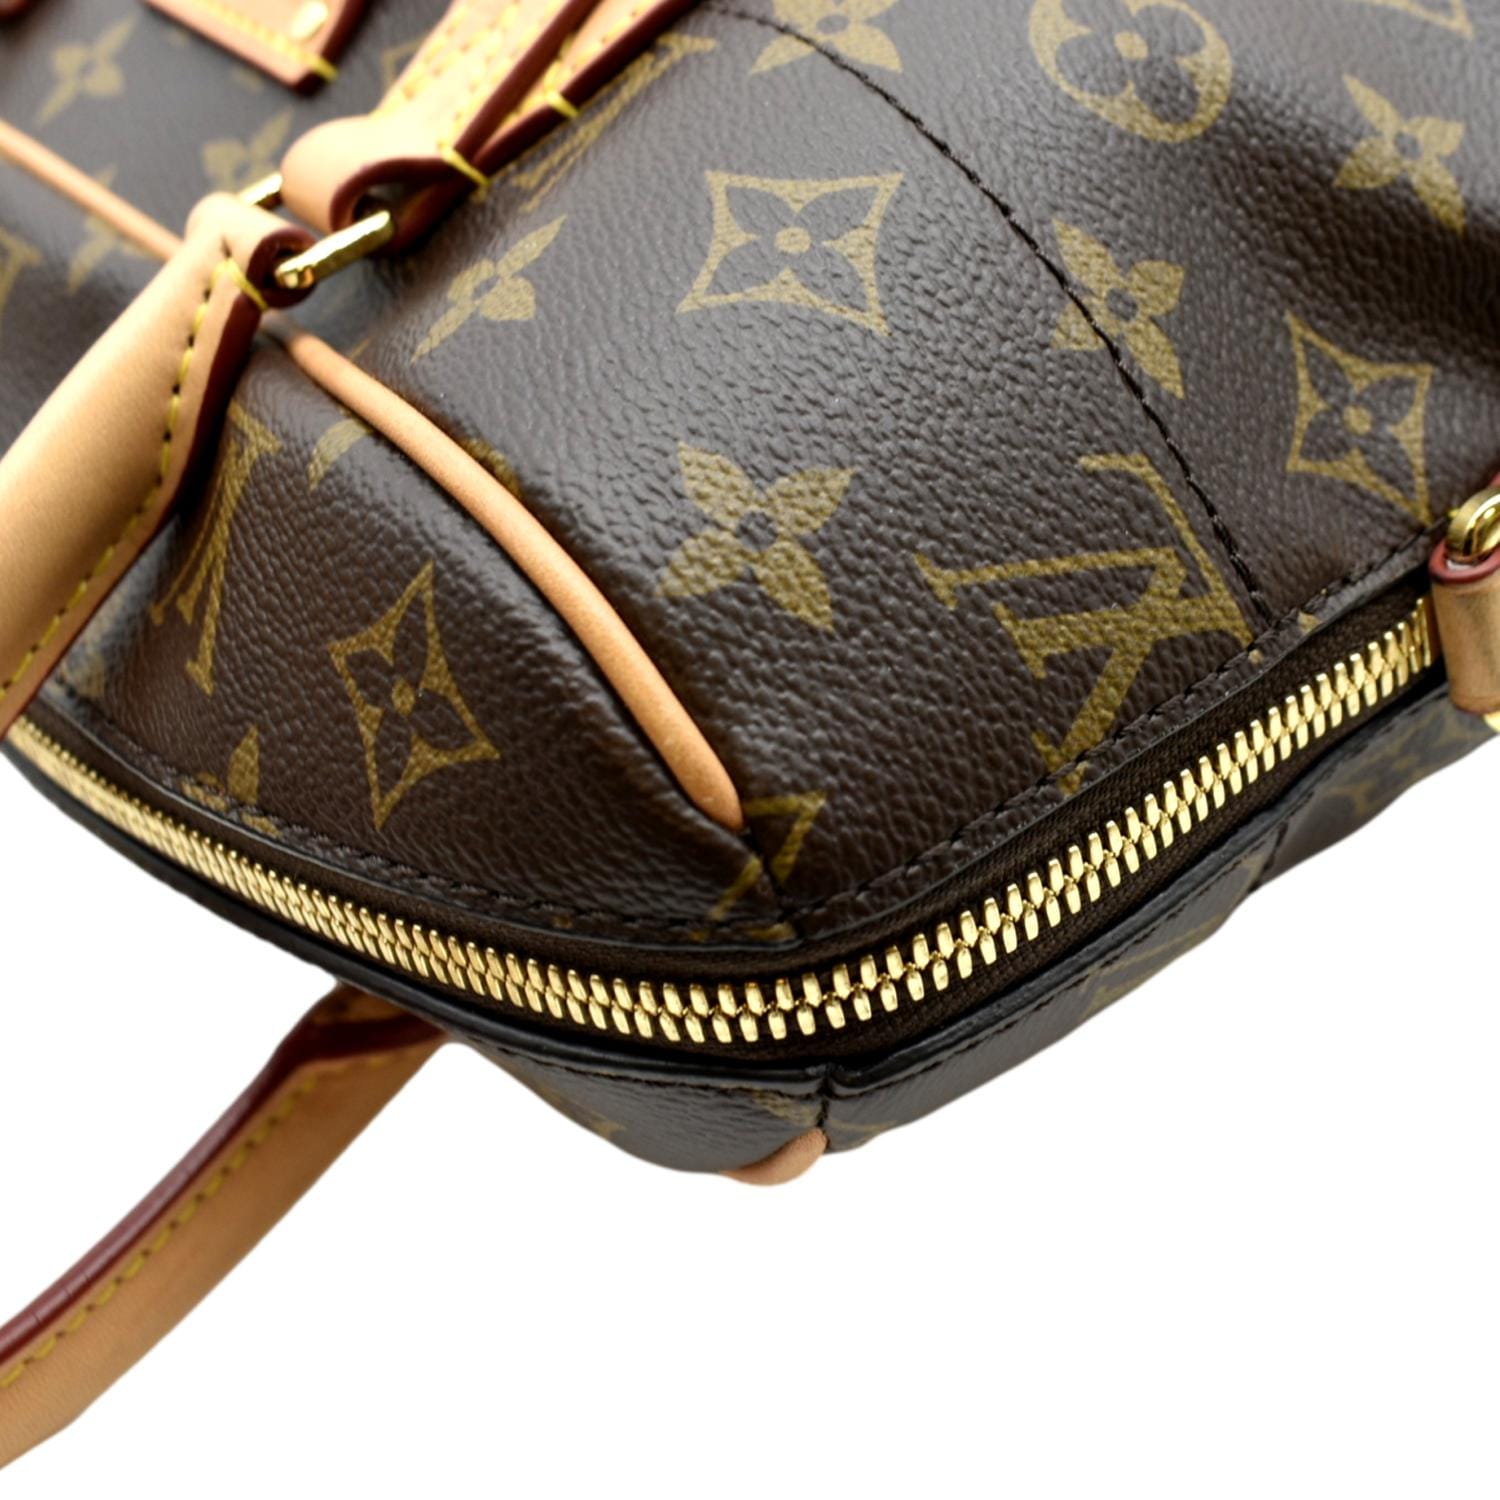 Louis Vuitton Carryall mm Bag, Black, One Size